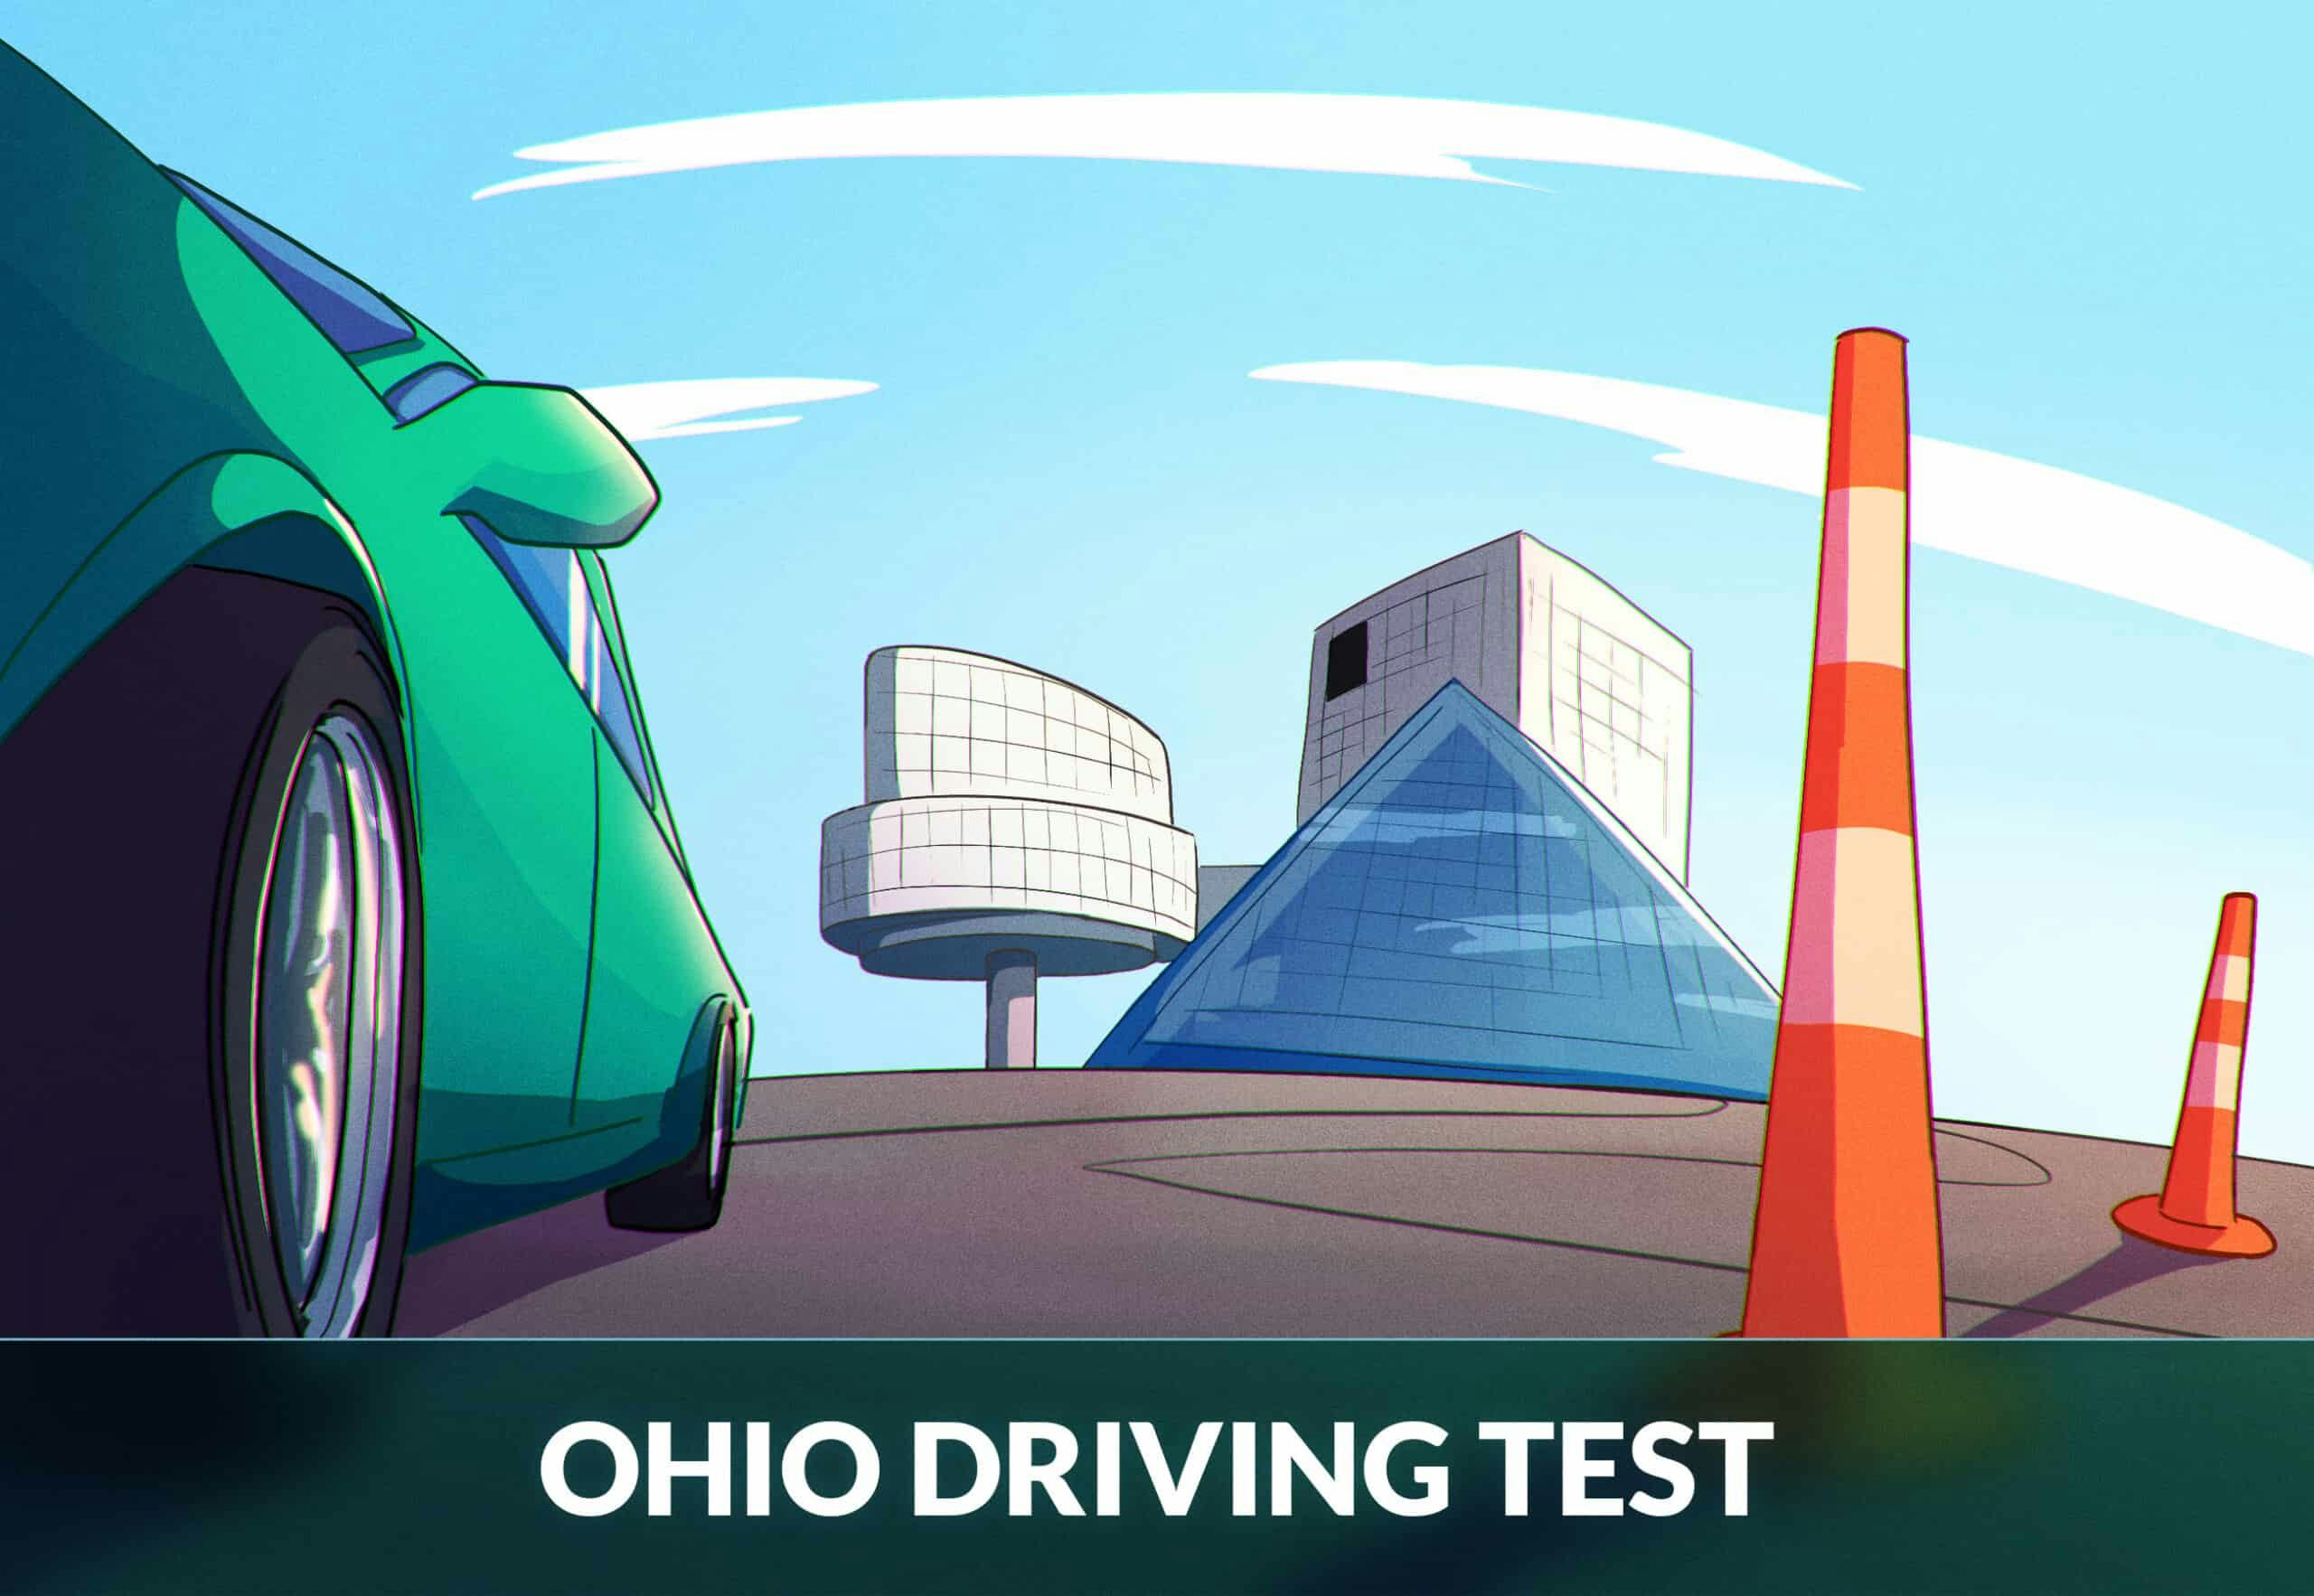 Ohio driving test